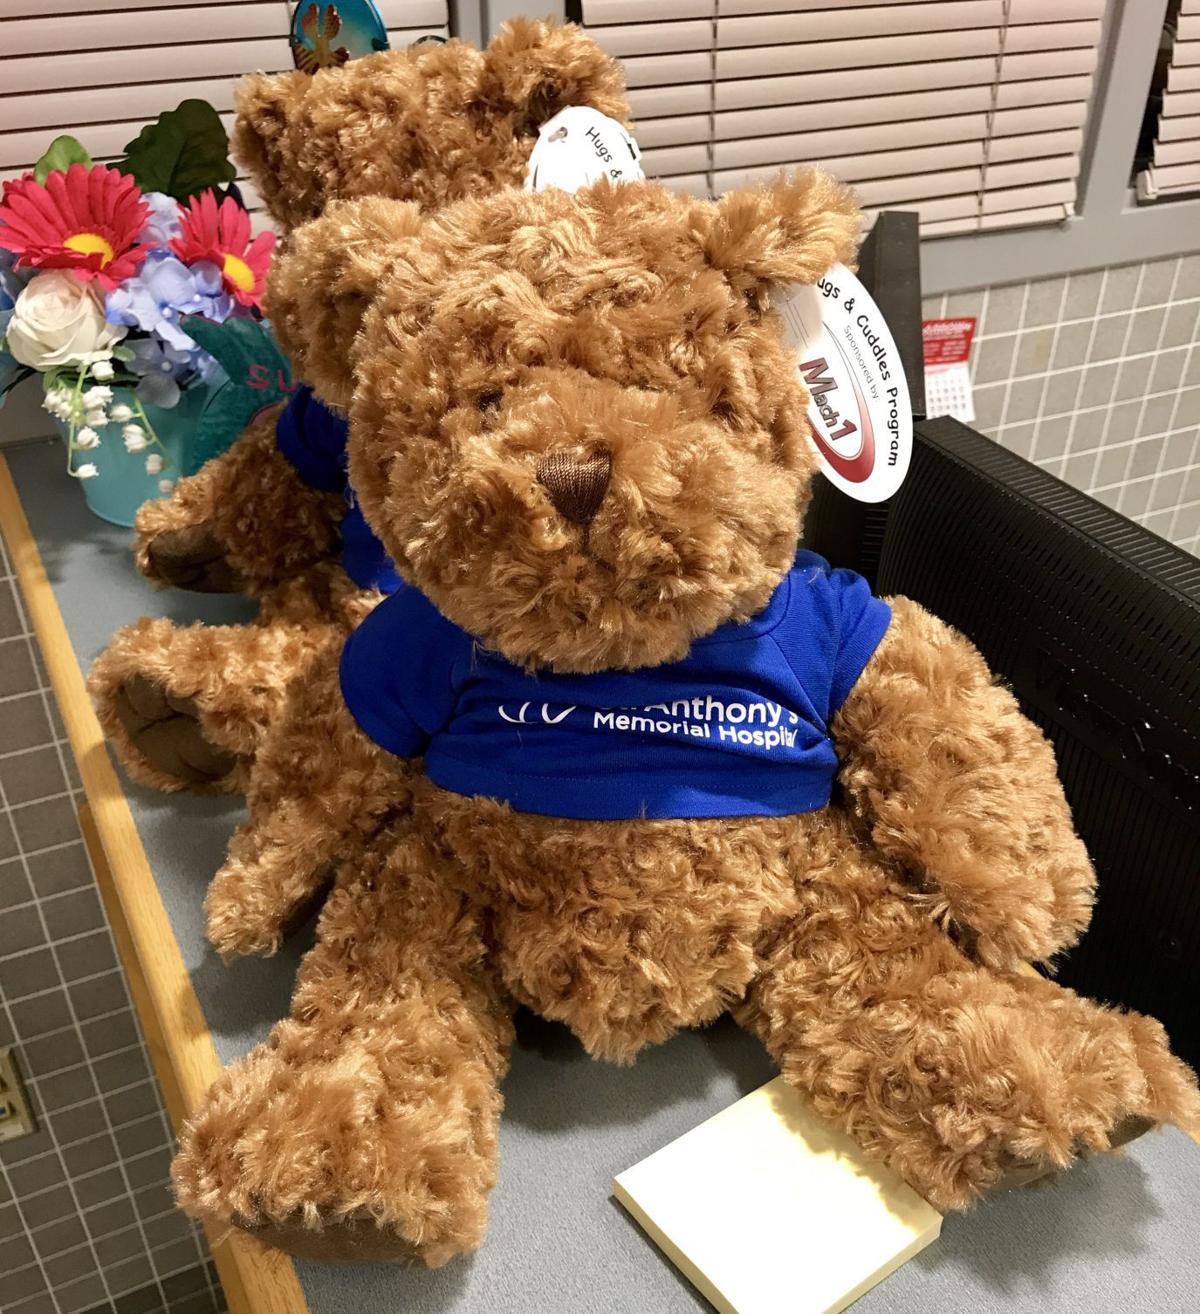 Hugs Cuddles Program Provides Teddy Bears For Kids Having Surgery Local Herald Review Com